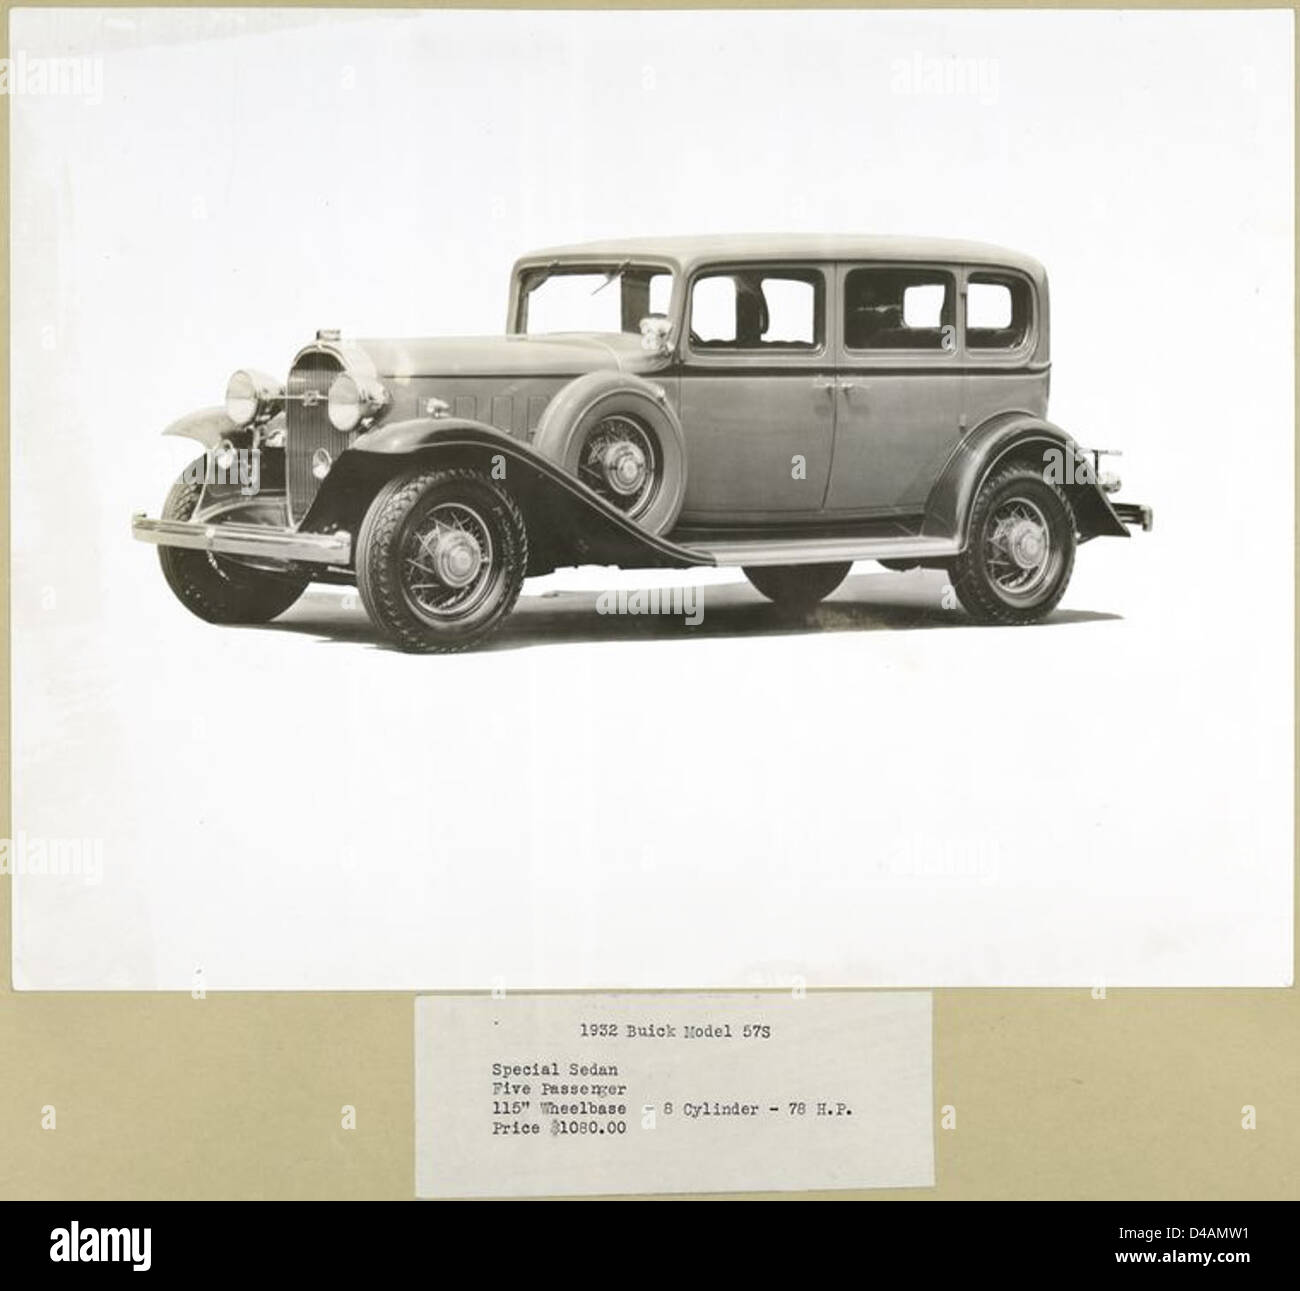 1932 Buick Model 57S. Special Sedan - five passenger. Stock Photo